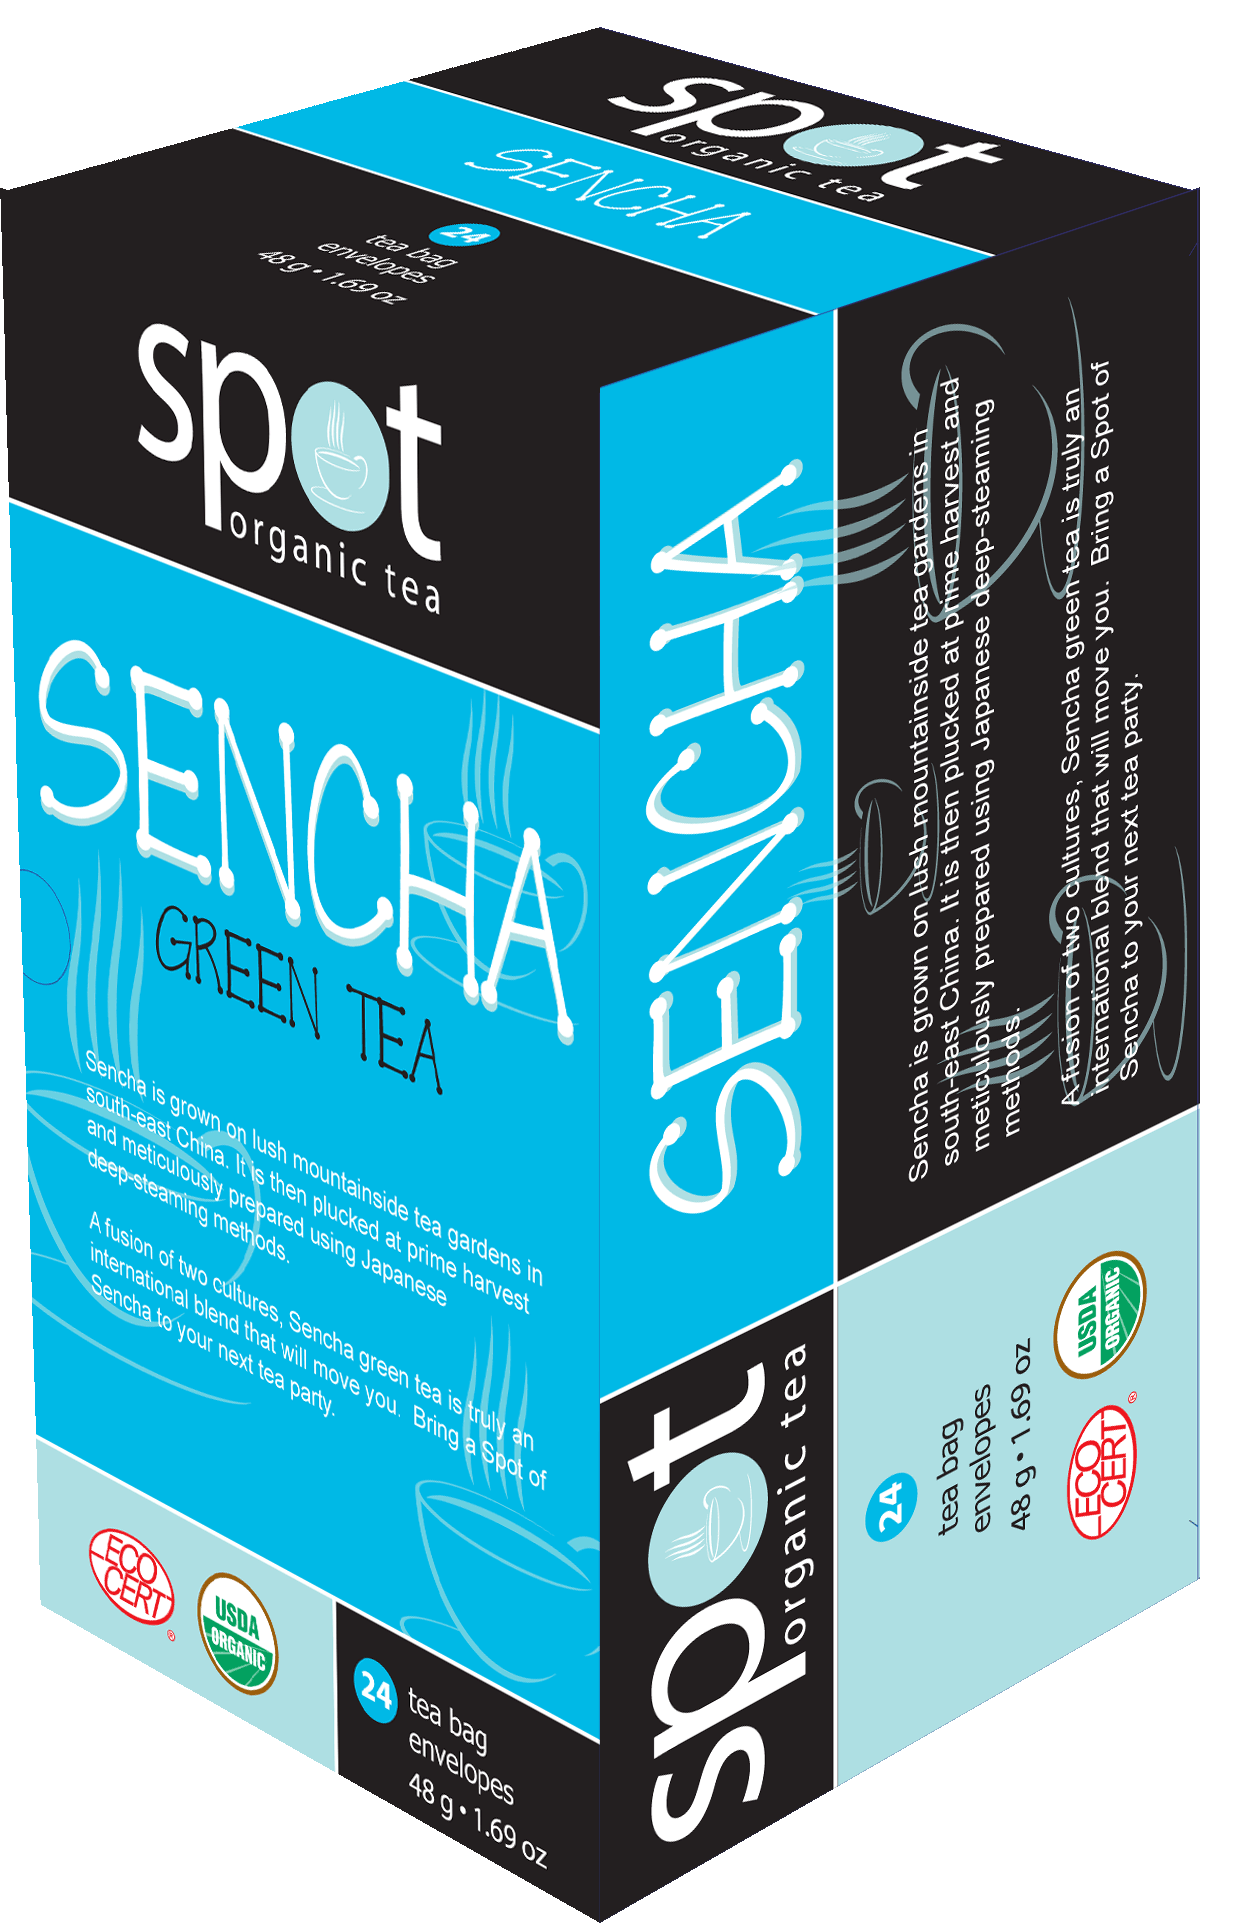 SPOT-Sencha